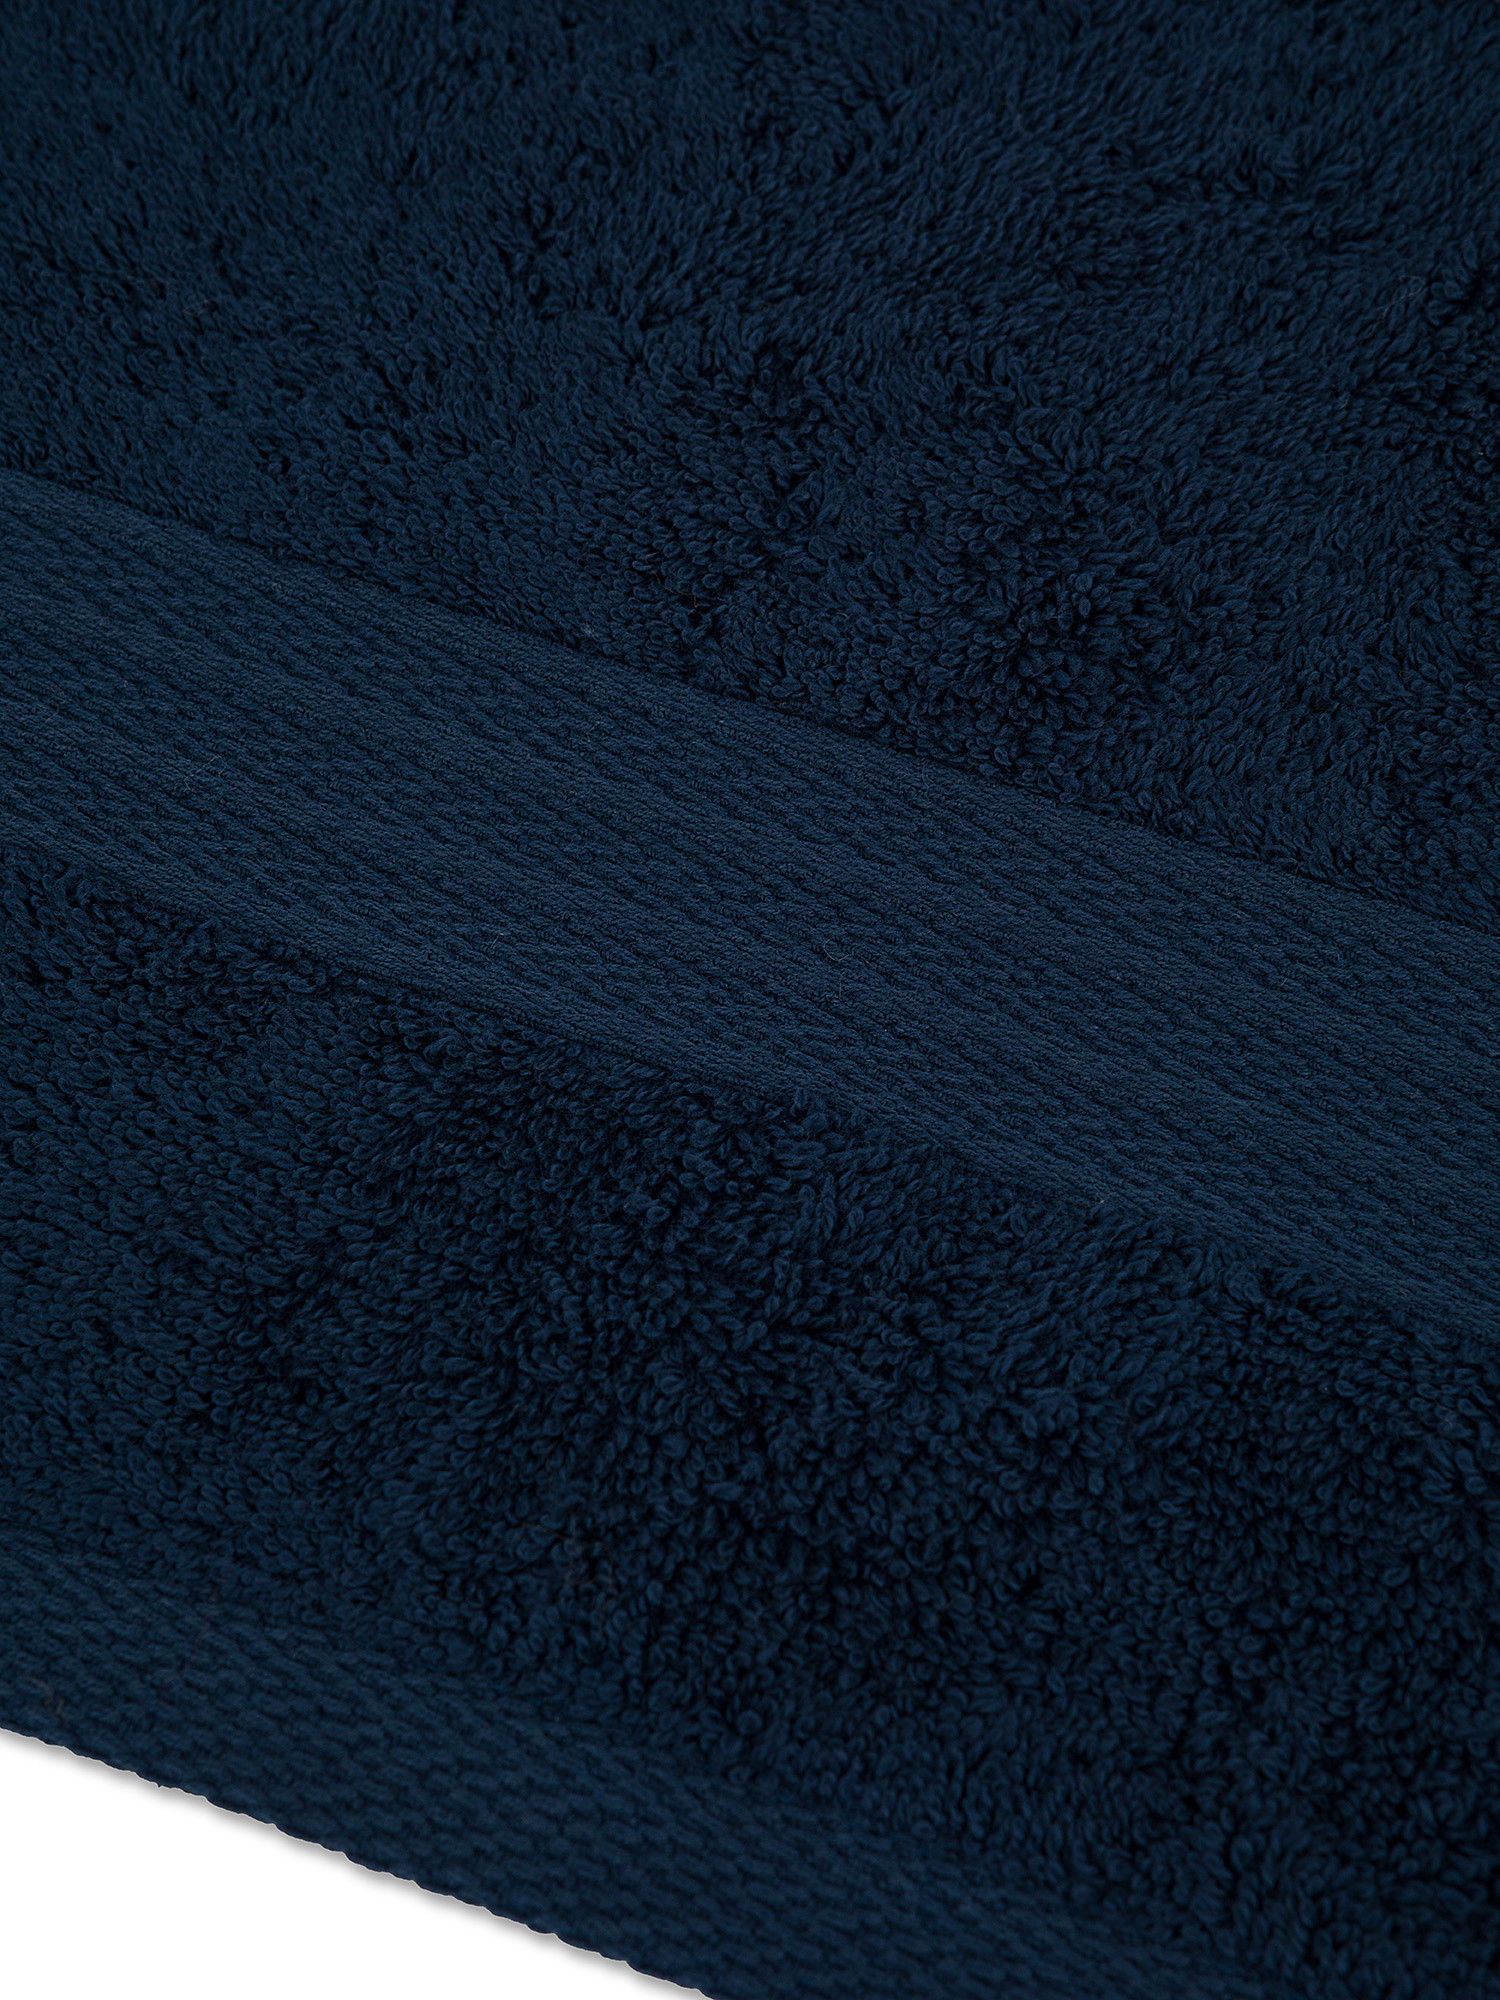 Zefiro solid color 100% cotton towel, Dark Blue, large image number 2